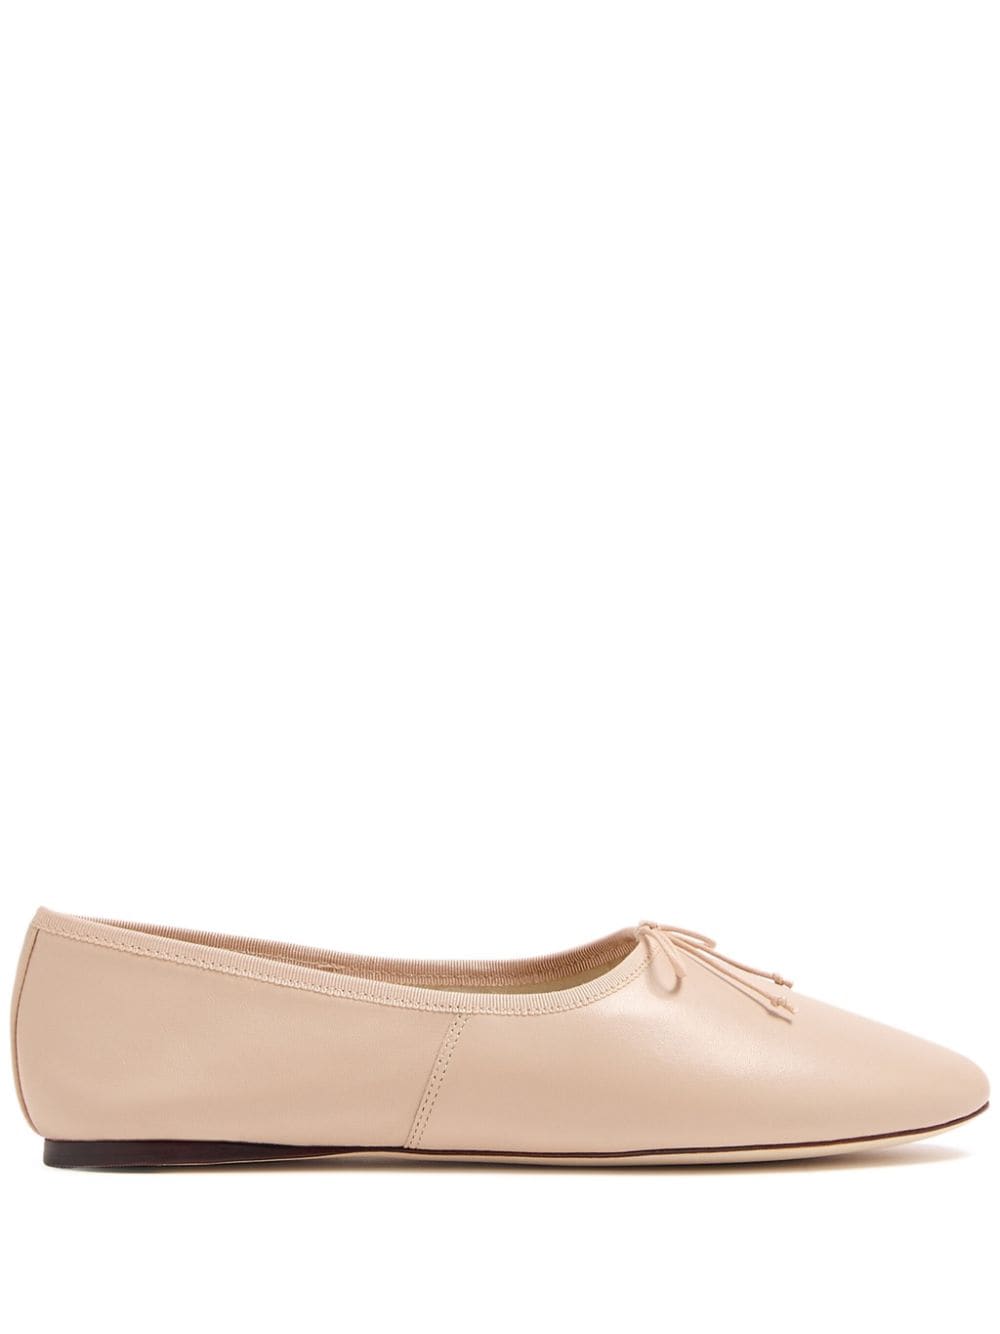 Loeffler Randall Landon leather ballerina shoes - Toni neutri